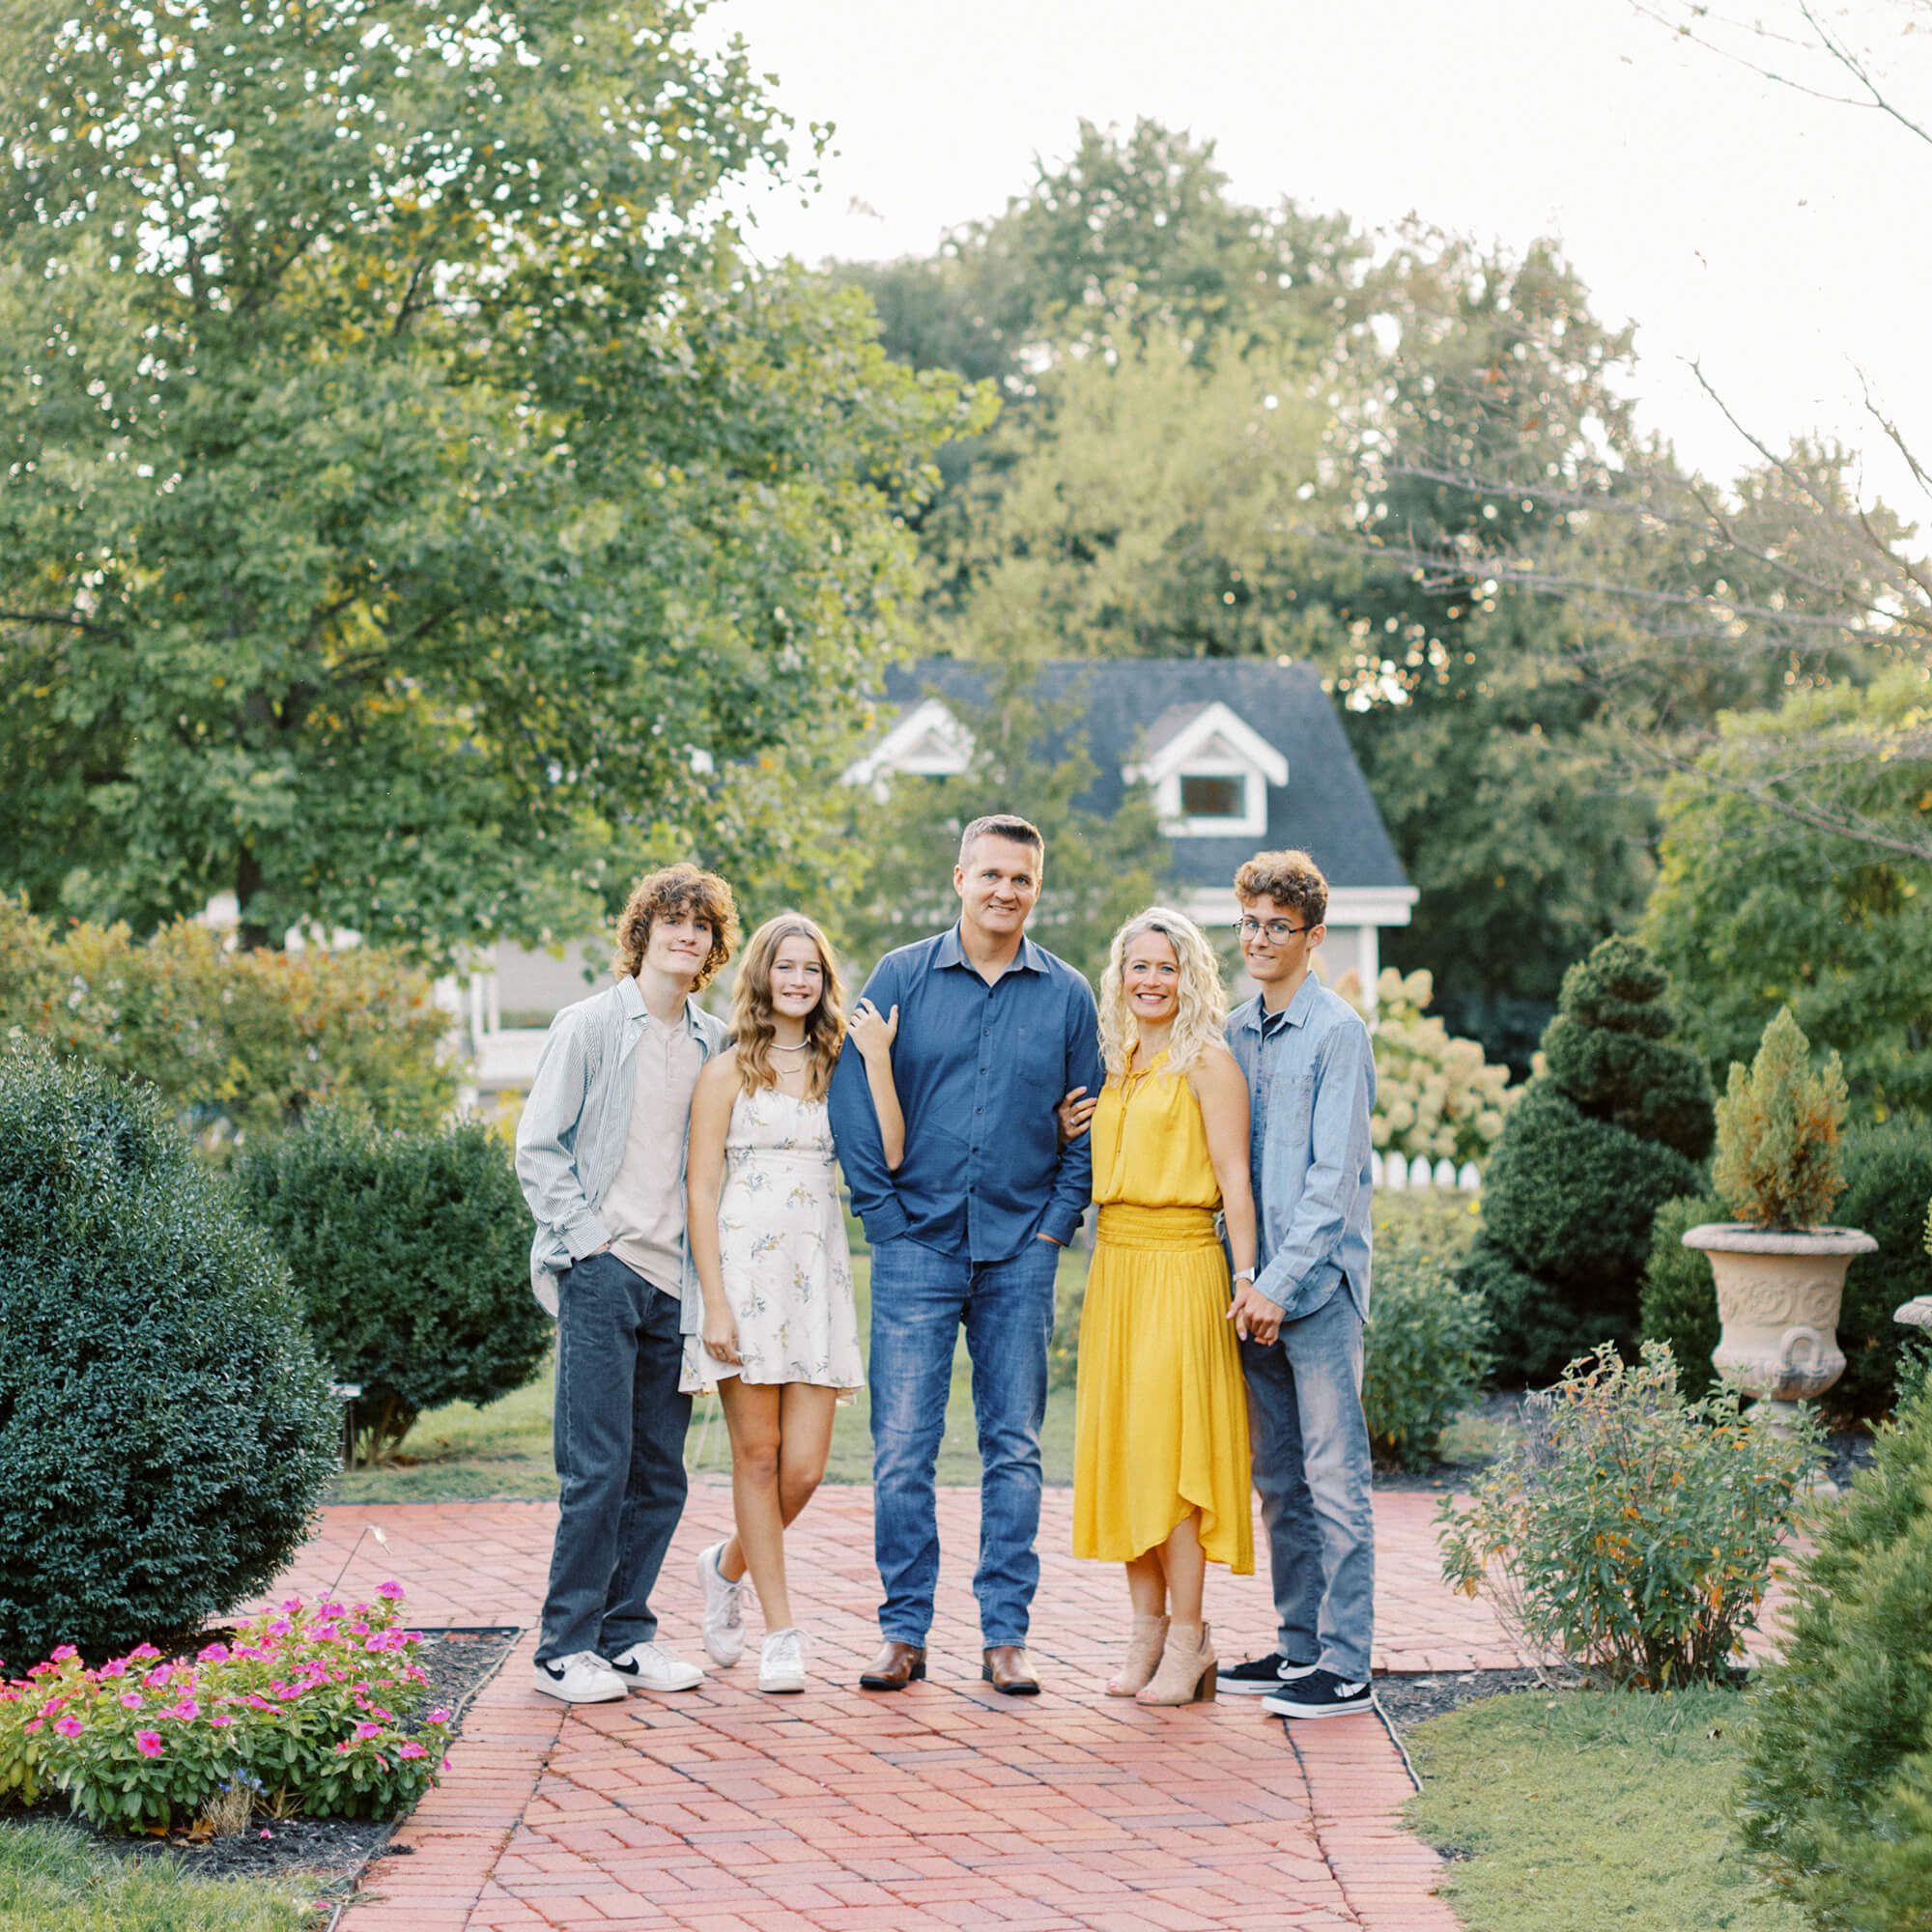 The Guffey Family | Fishers, Indiana Photographer